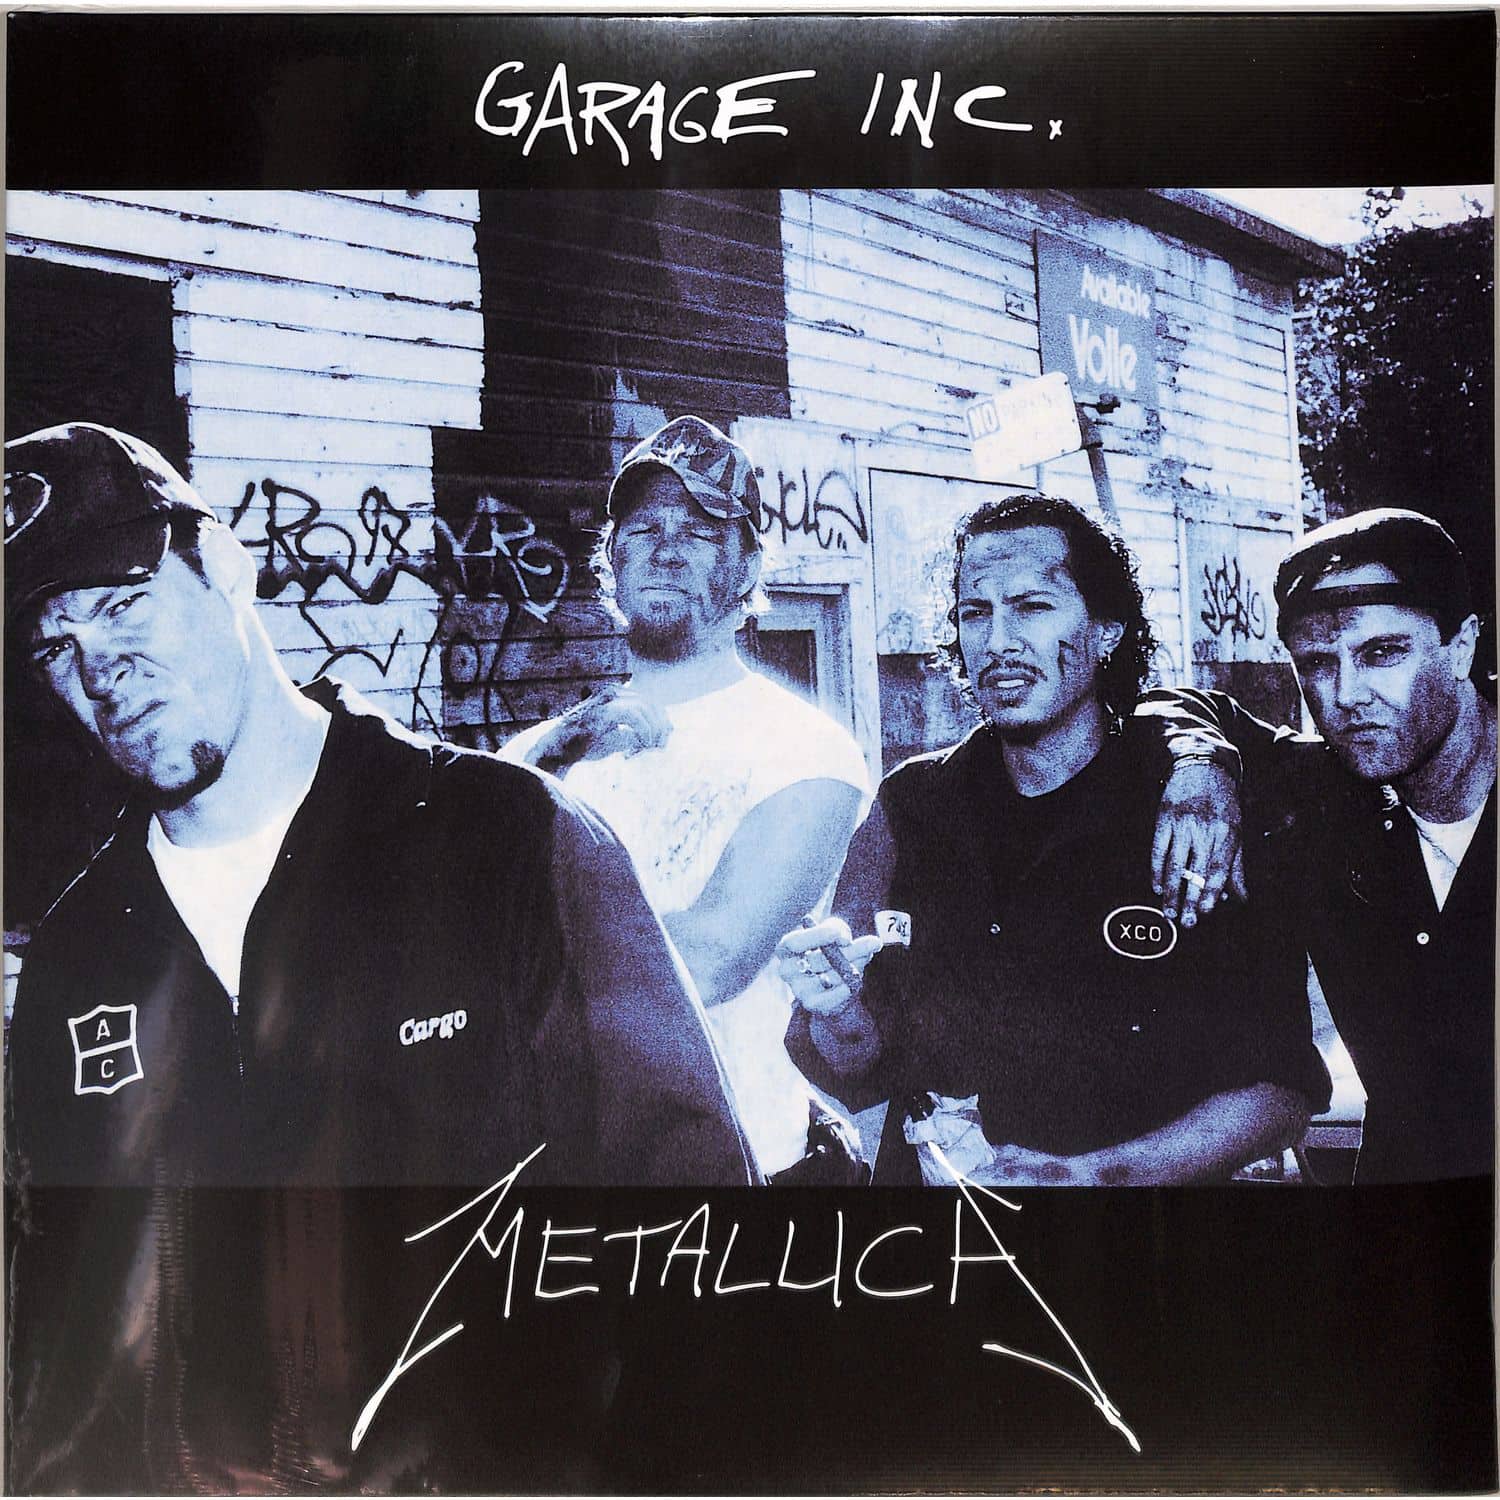 Metallica - GARAGE INC. 